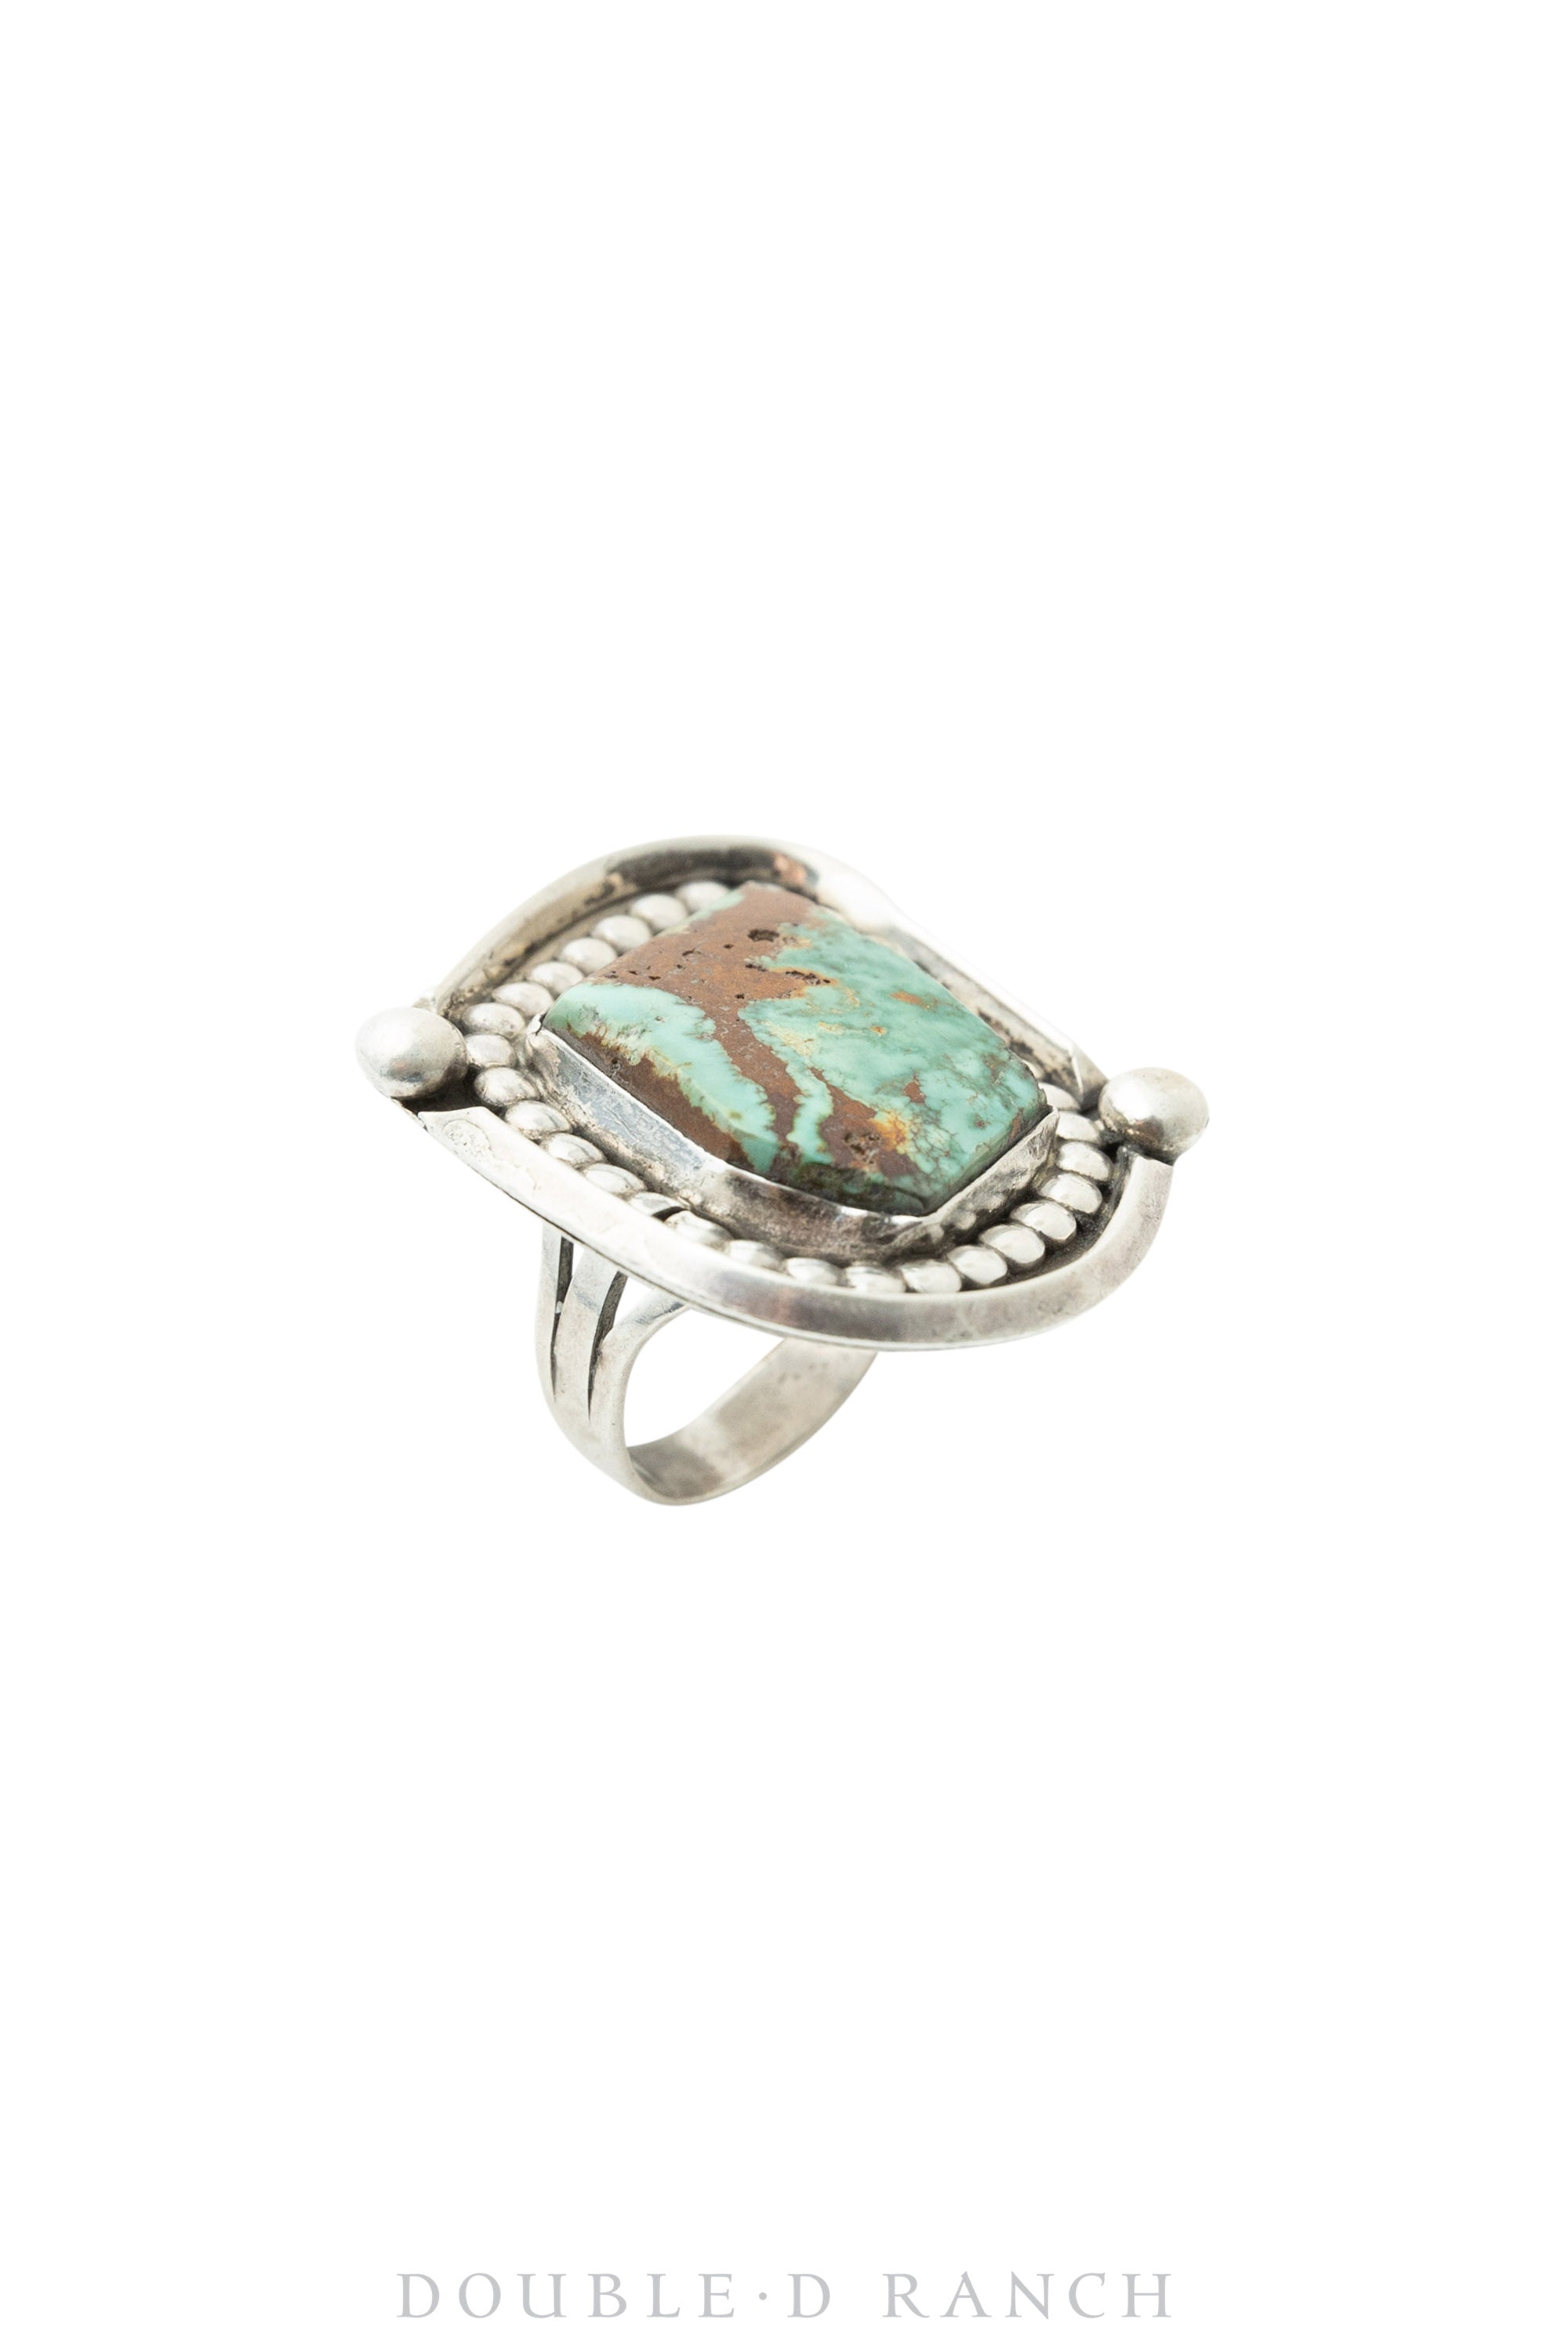 Ring, Turquoise, Single Stone, Sterling Drop Bezel, Vintage, 1009